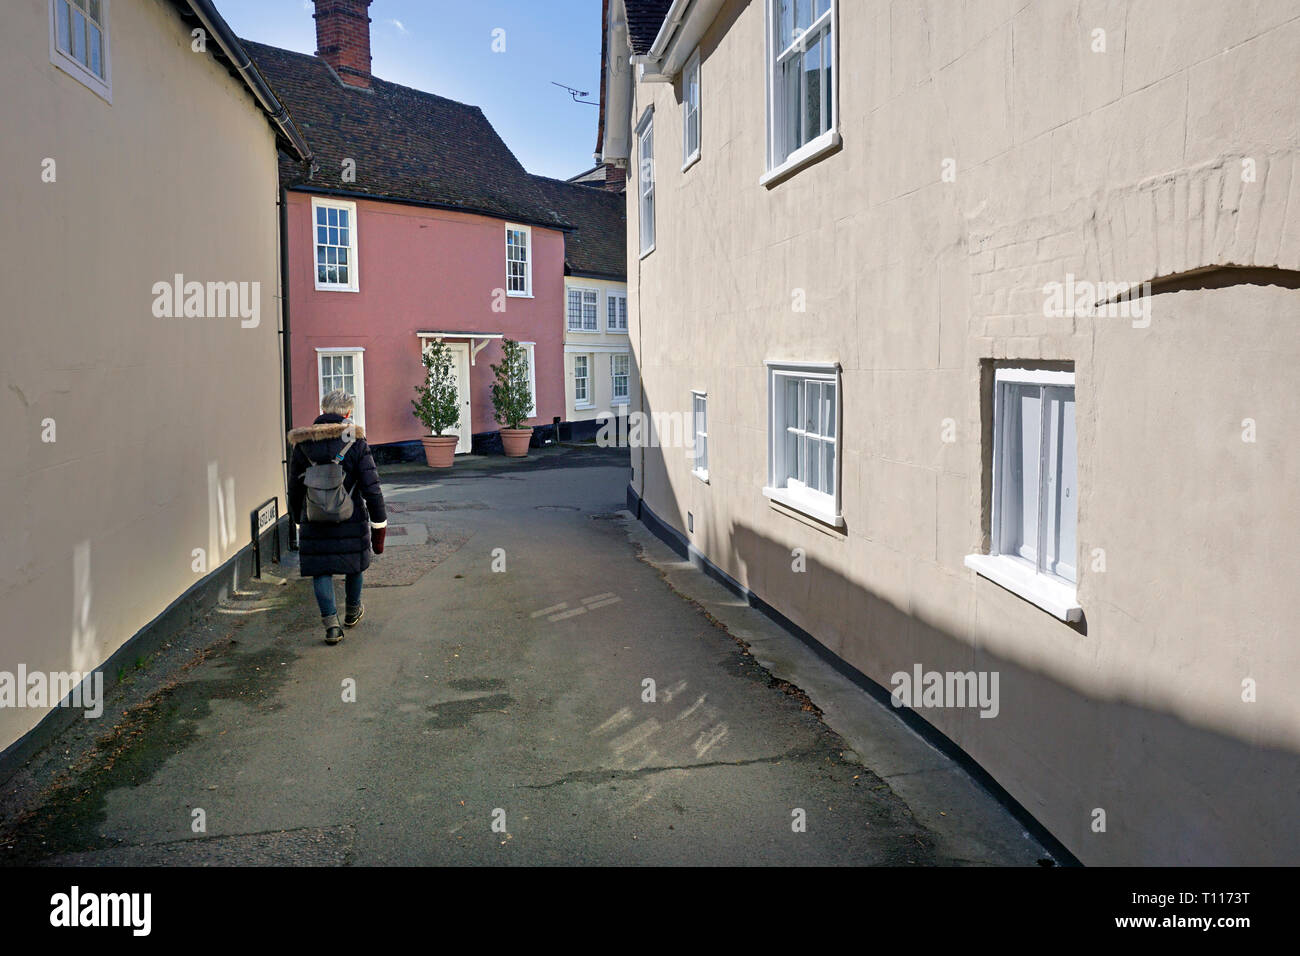 Einsame Frauen walklng durch Rückseite sdtreet Hedinghmam Casle, Essex, England Stockfoto